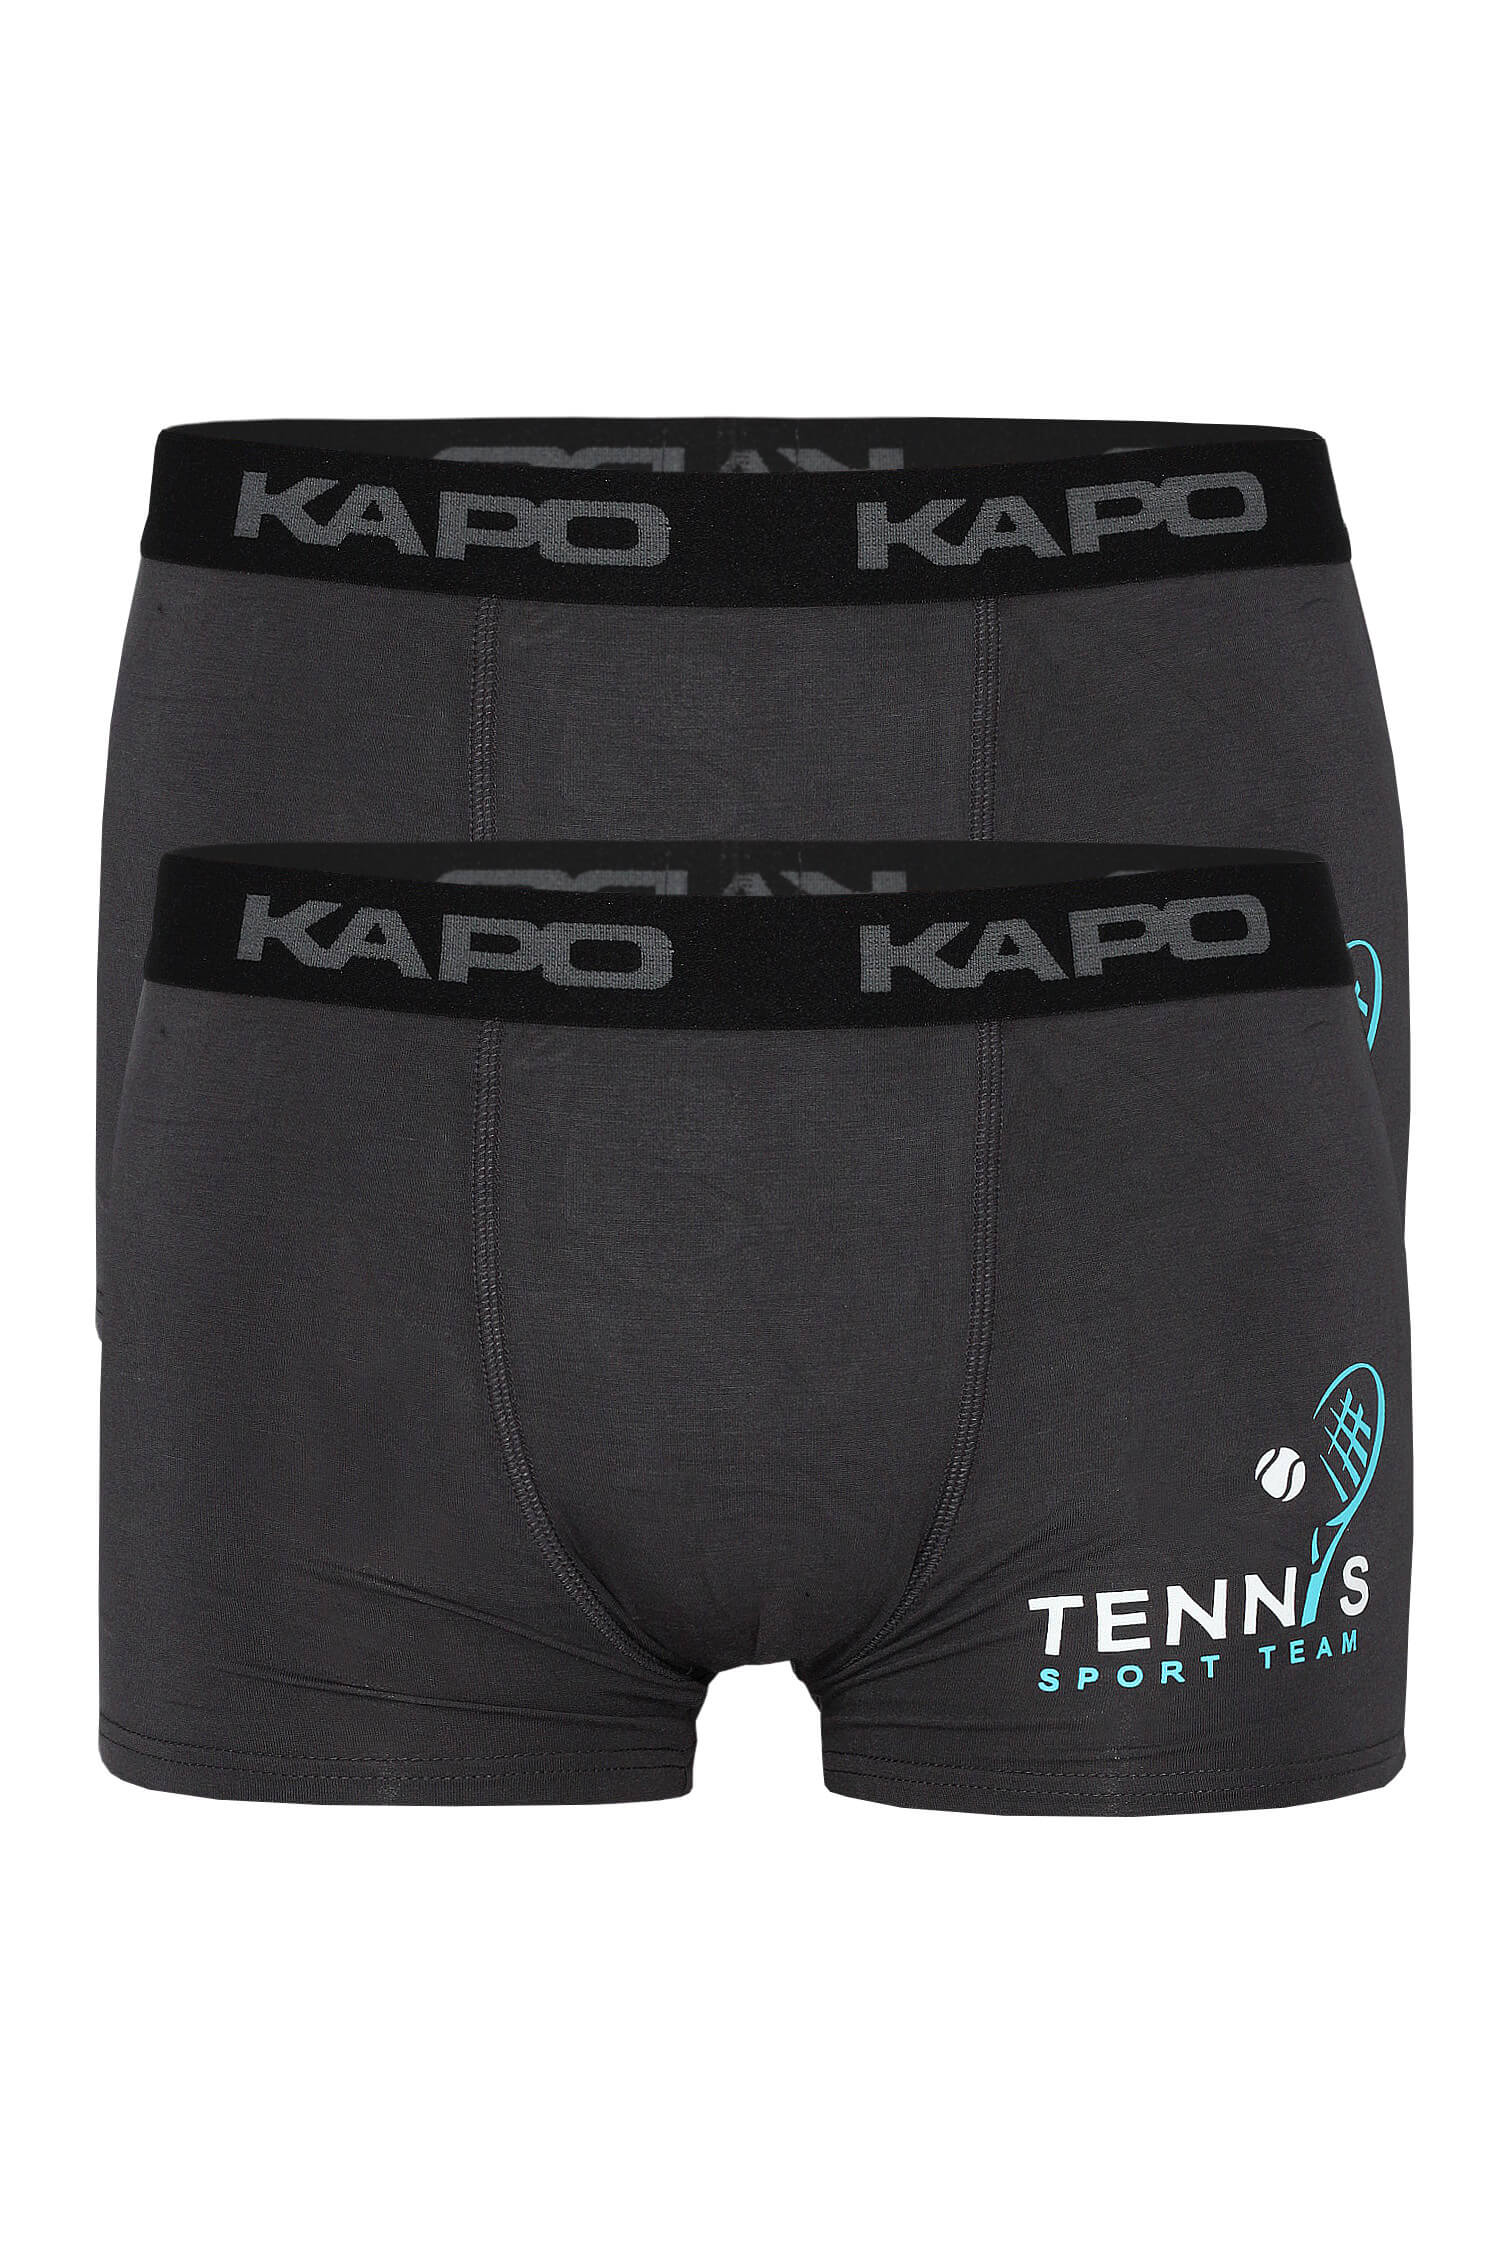 Rafael Kapo tenis boxerky - dvojbal XXL tmavě šedá